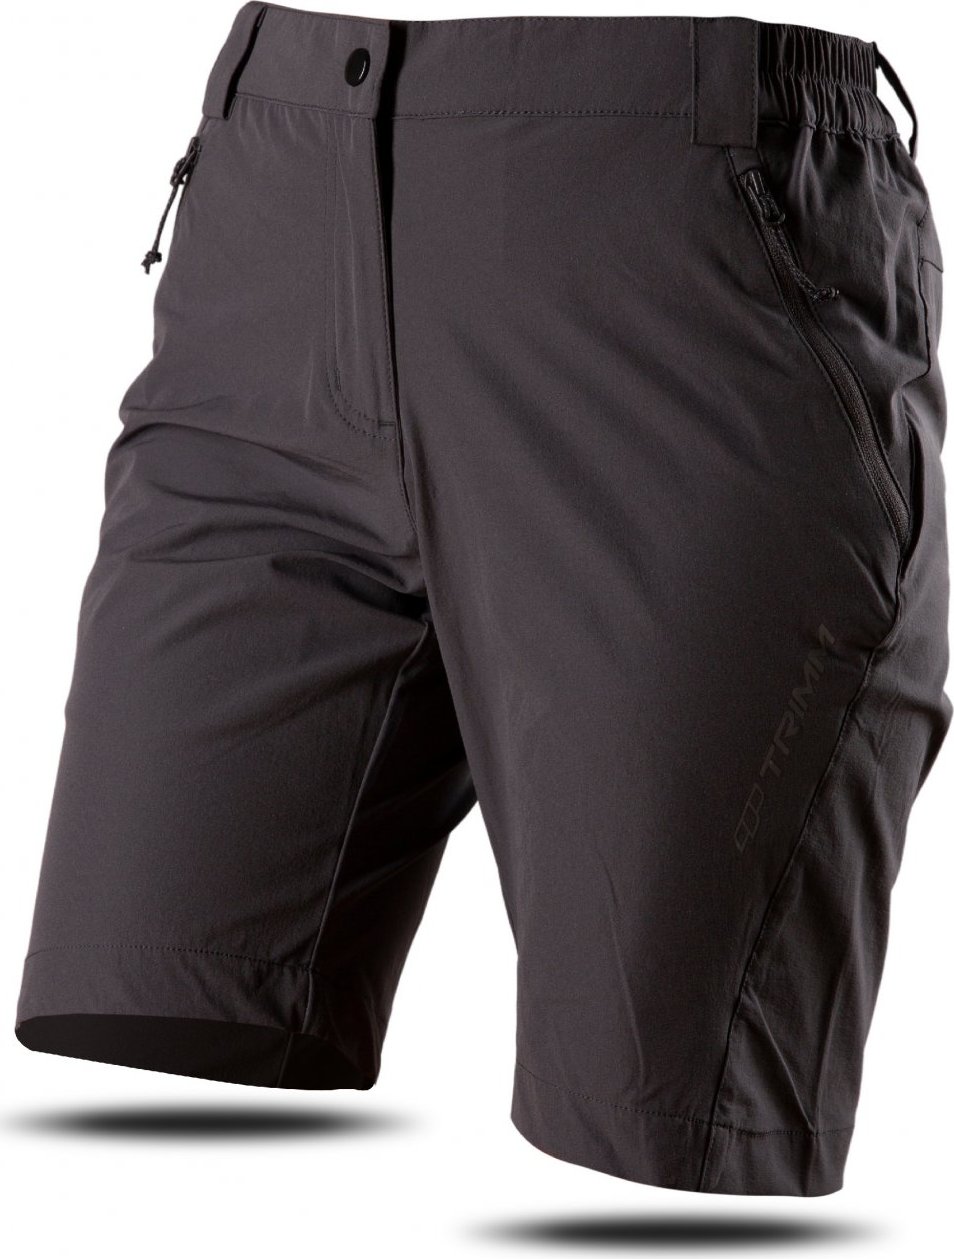 Dámské šortky TRIMM Tracka tmavě šedé Velikost: XL, Barva: dark grey